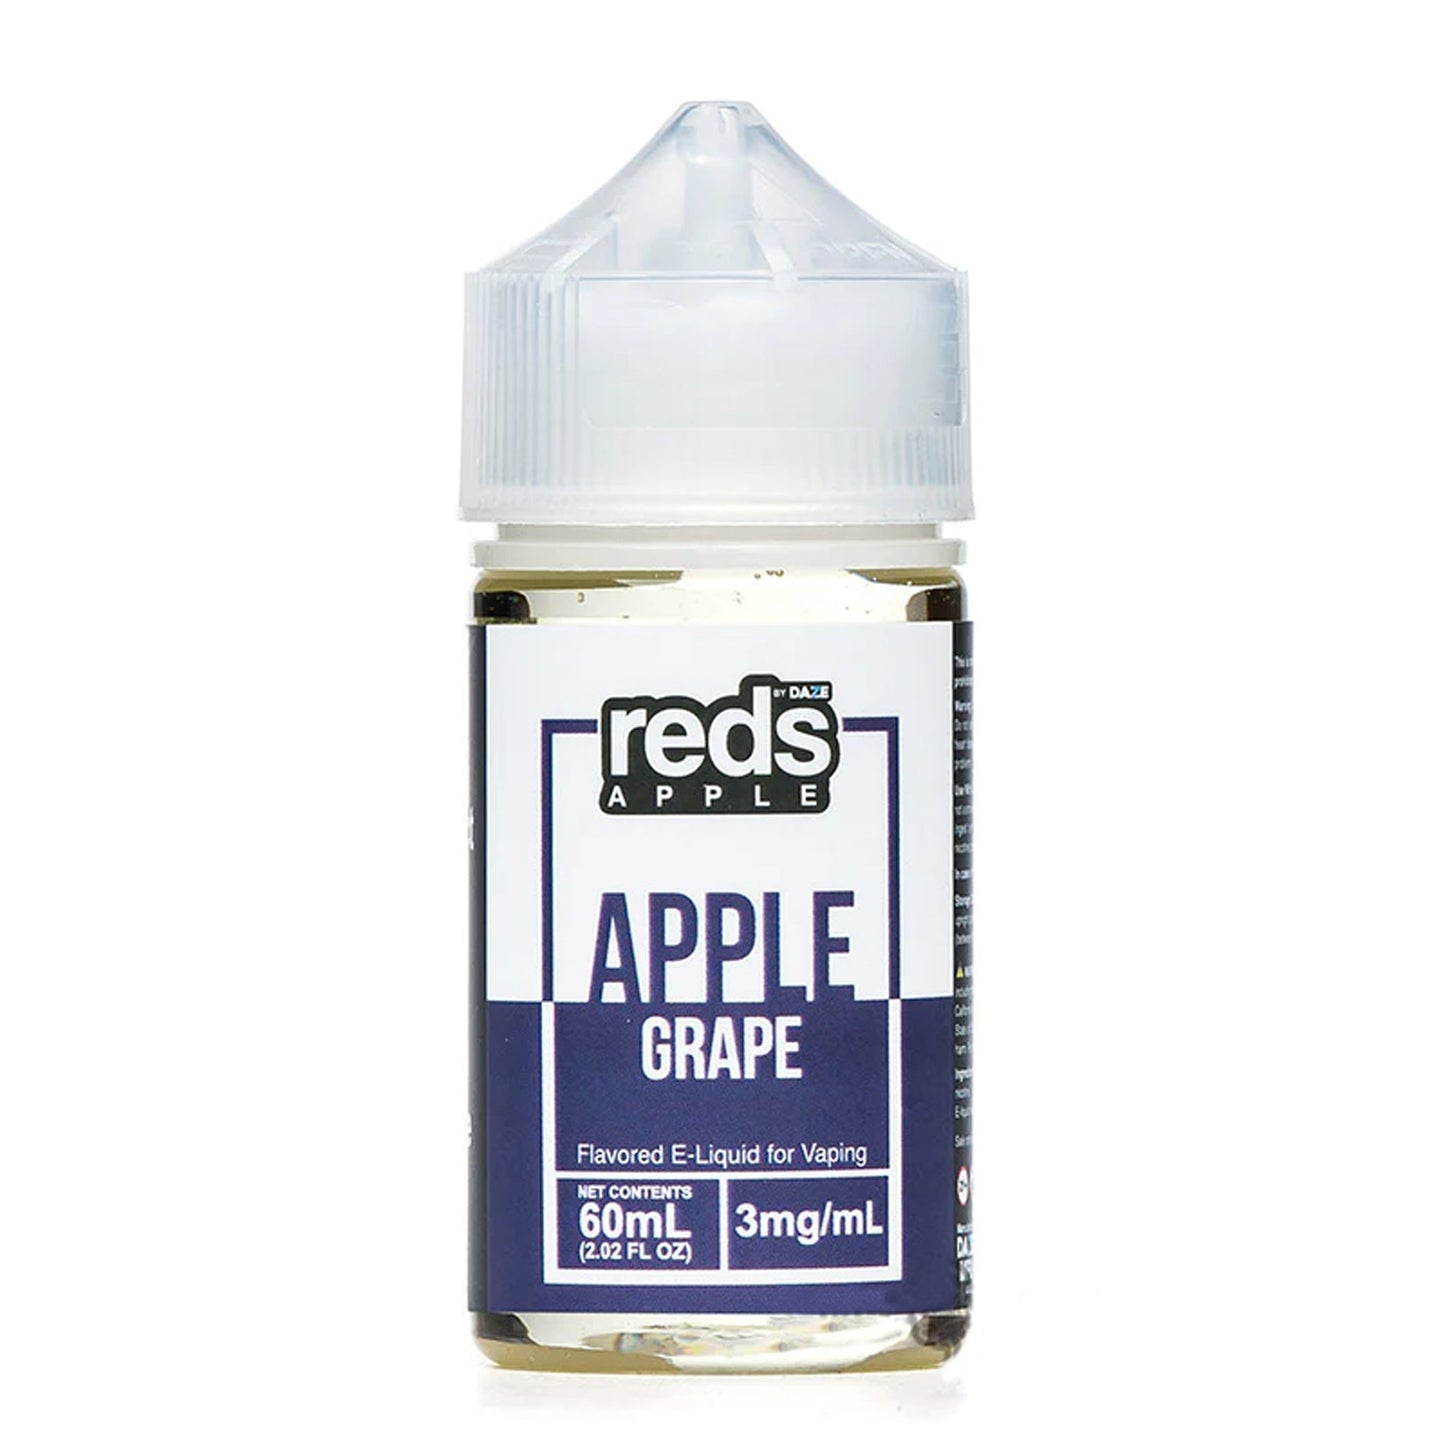 Load image into Gallery viewer, 7 Daze Reds Apple 60ML - Grape Apple - Mobs Enterprise
